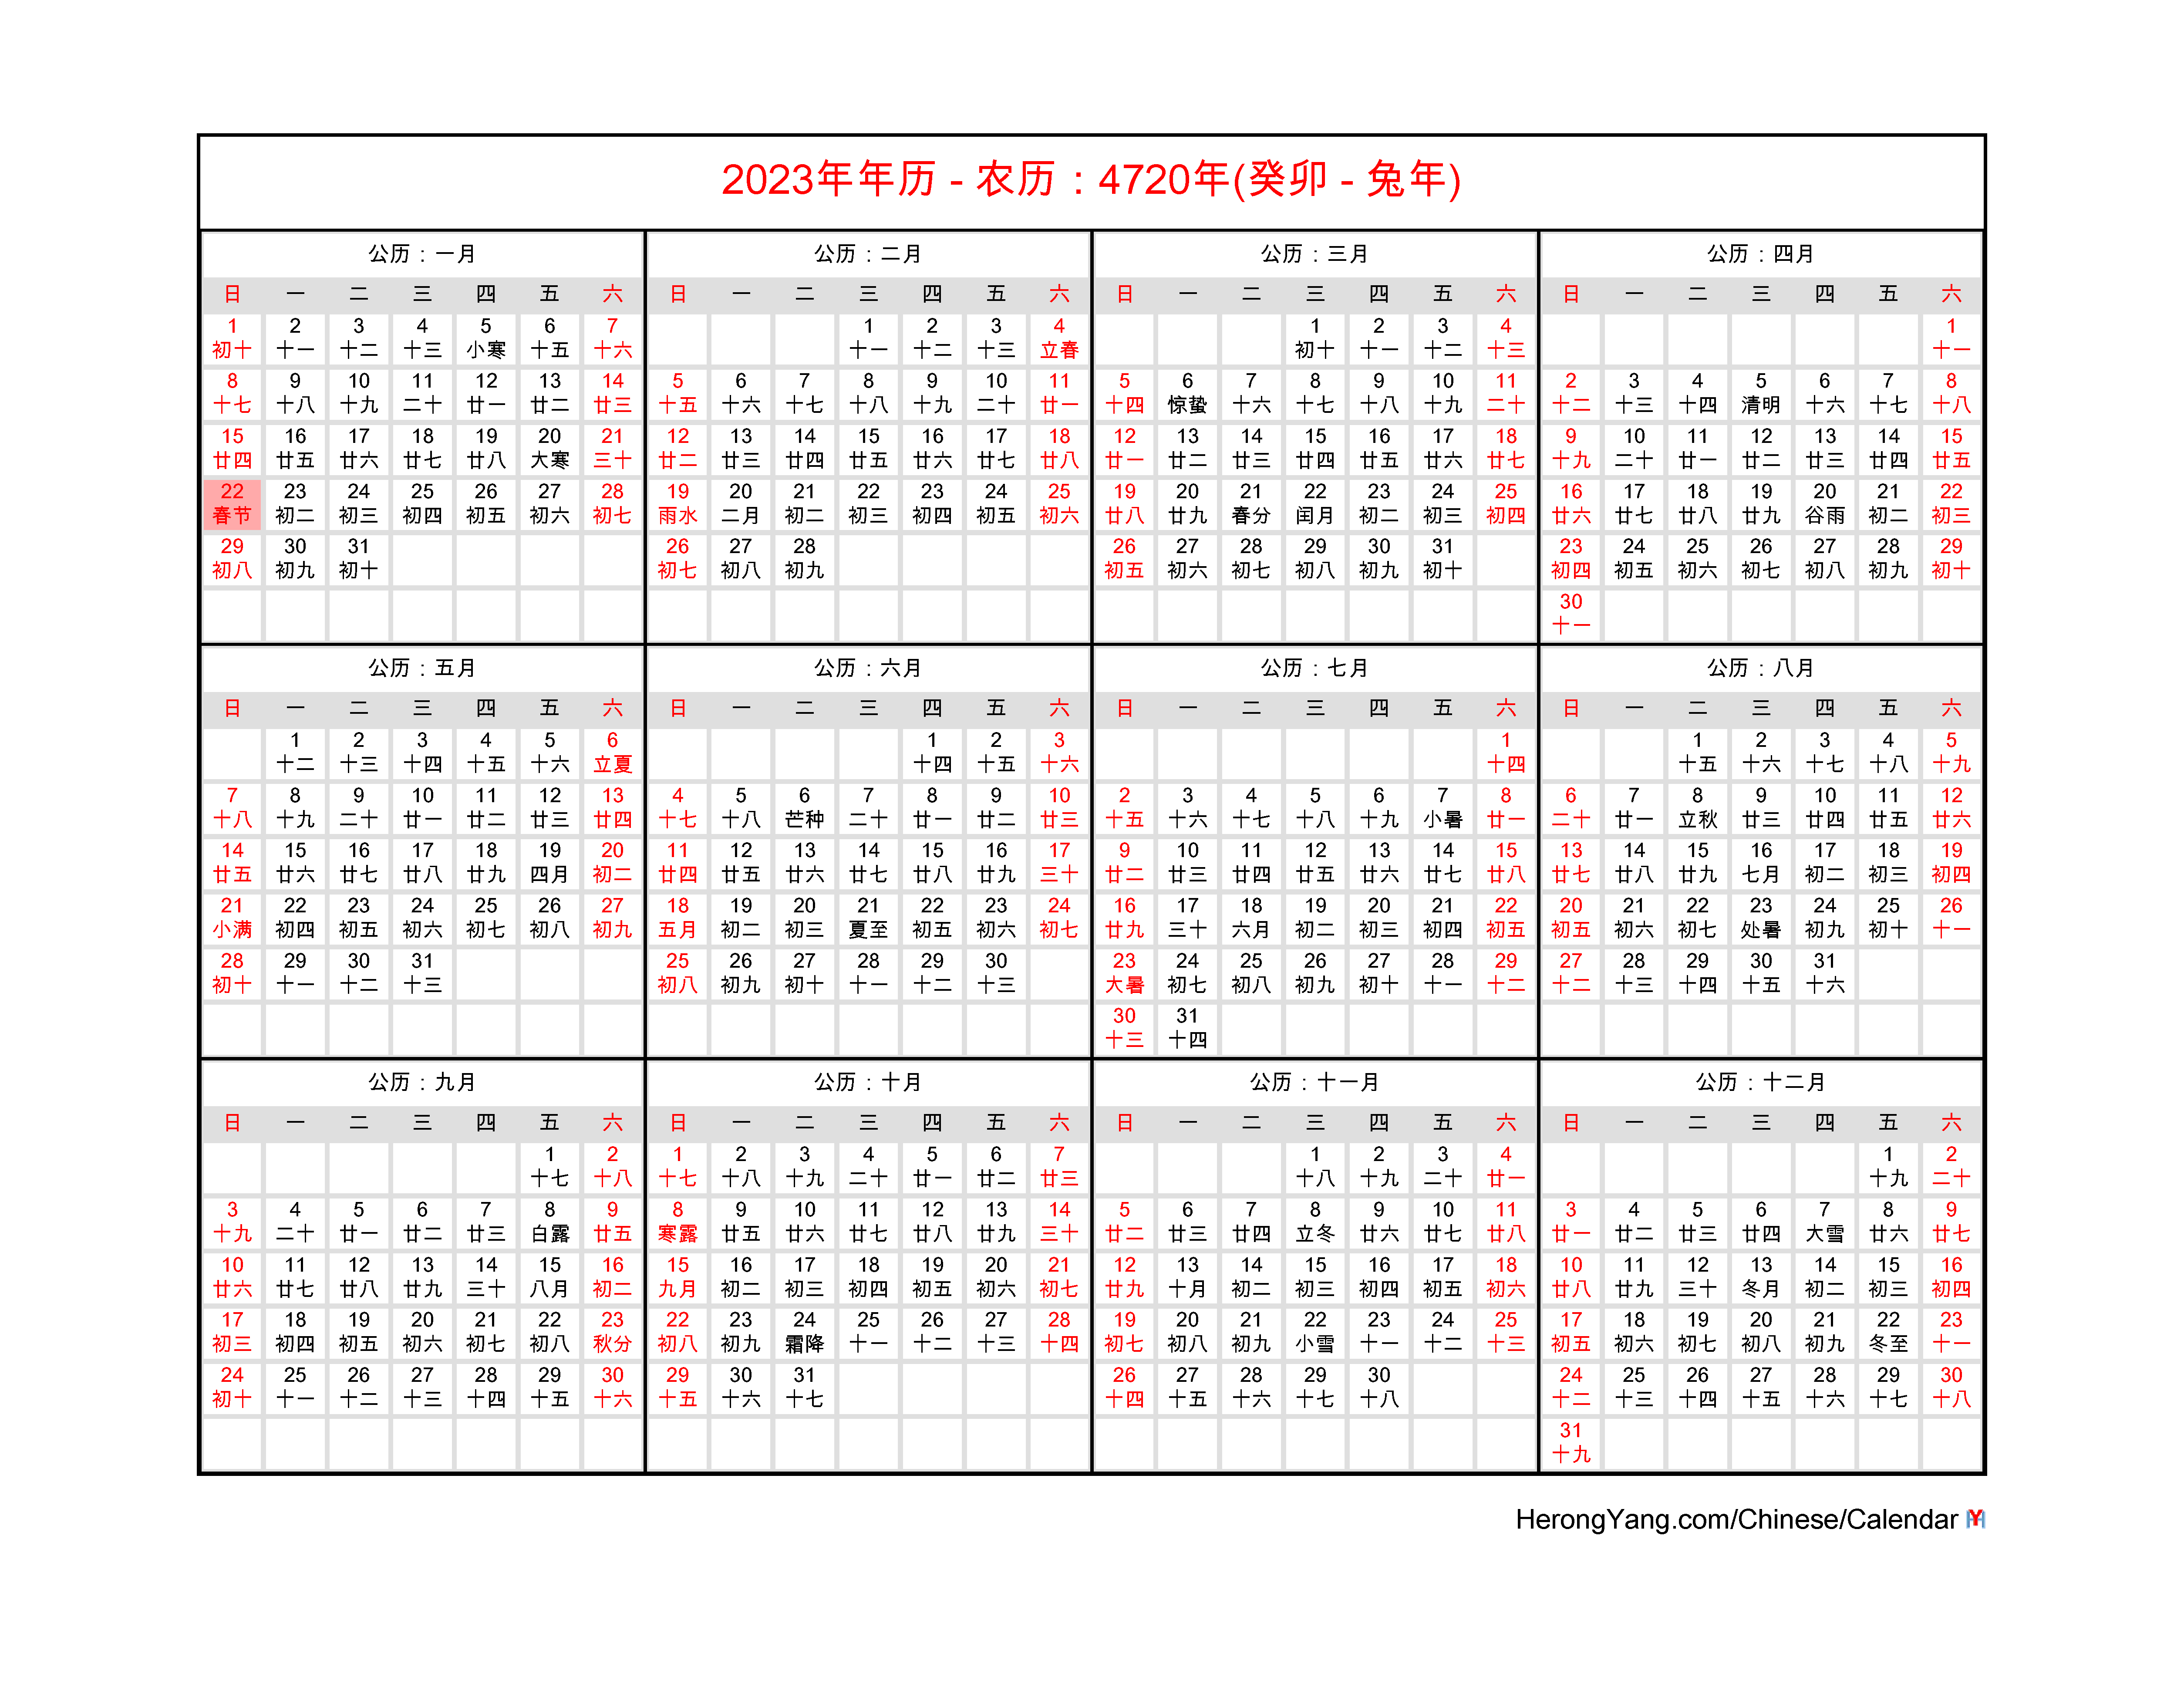 Chinese Calendar 2023 Chinese New Year Get New Year 2023 Update